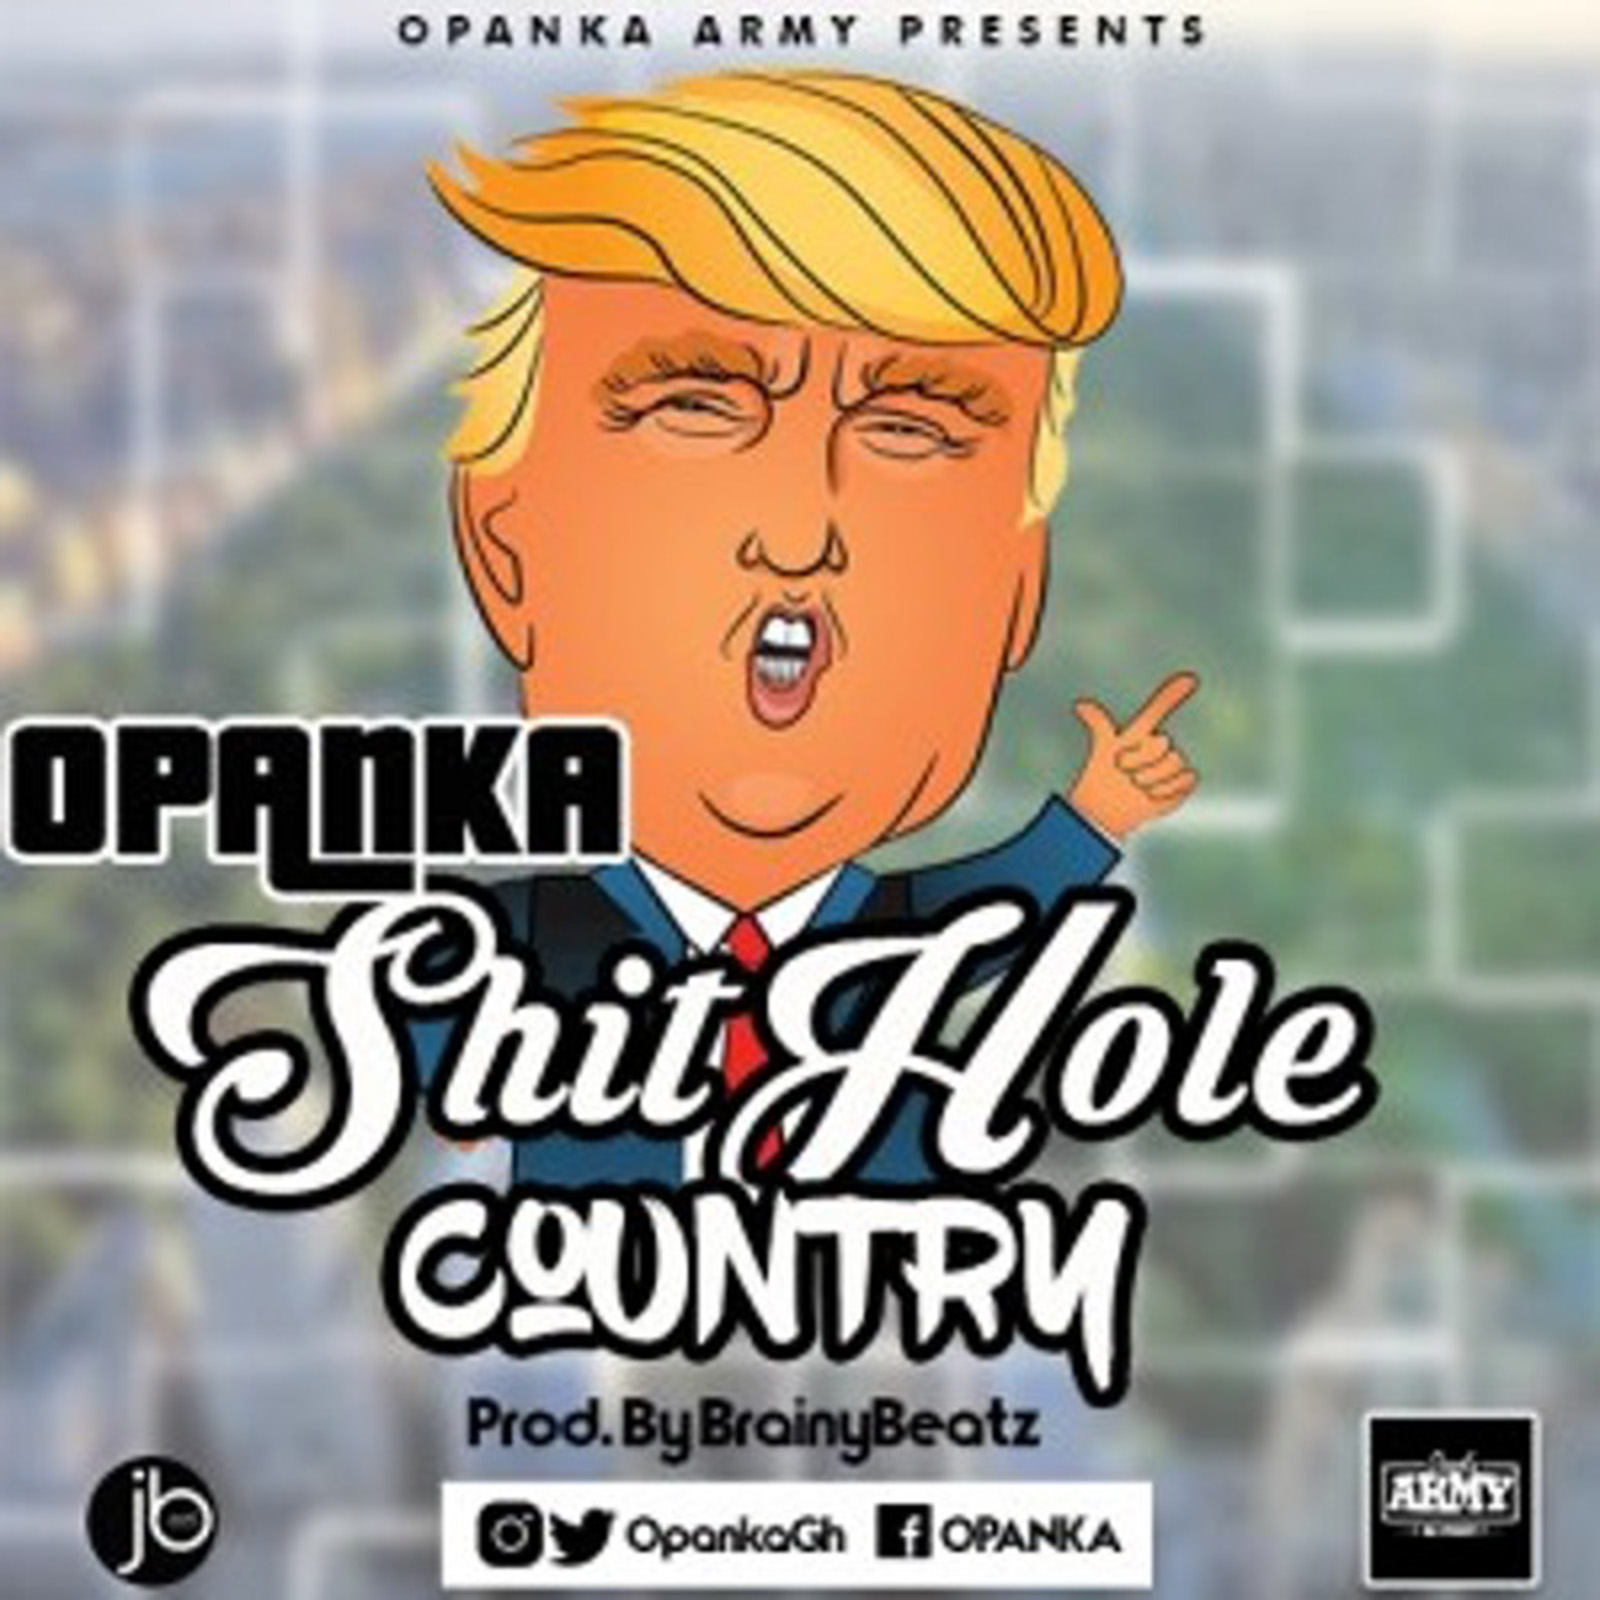 Shit Hole Country by Opanka